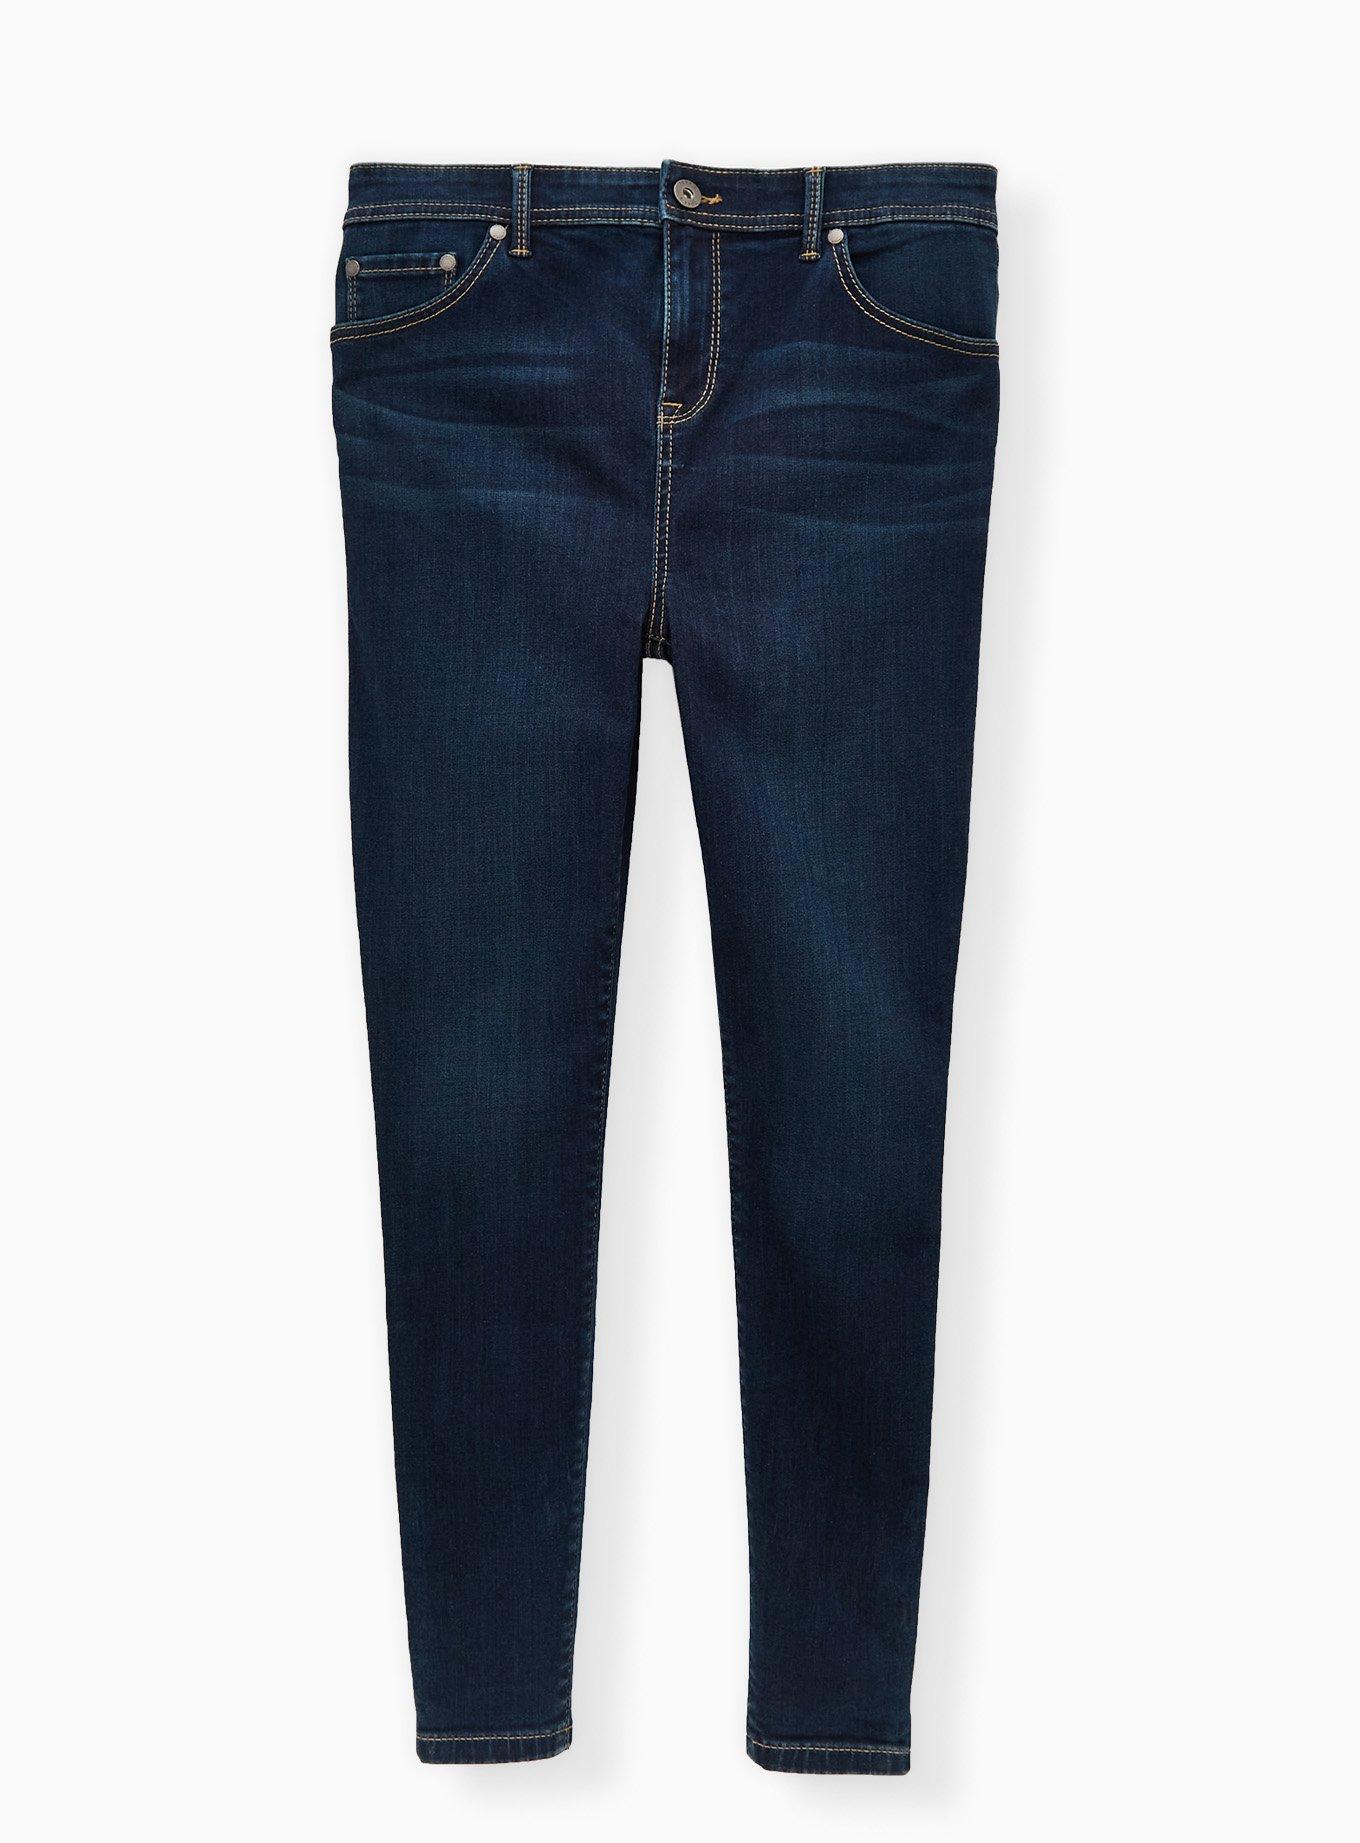 Torrid straight leg tummy control jeans medium wash. Size 20